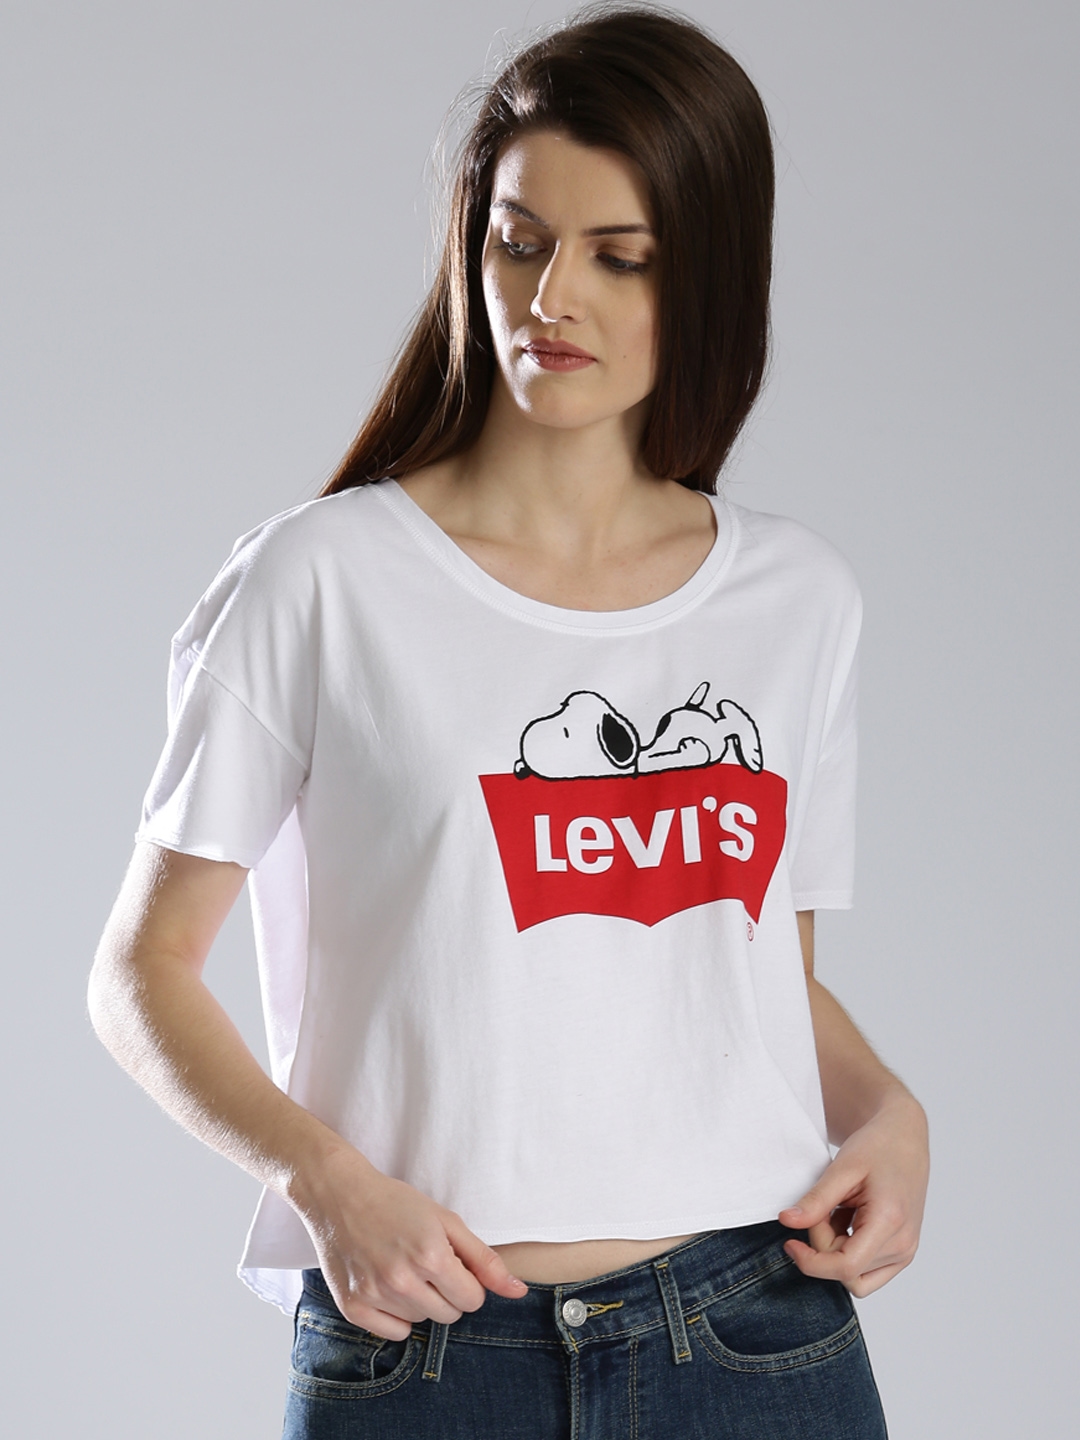 levis t shirt white ladies